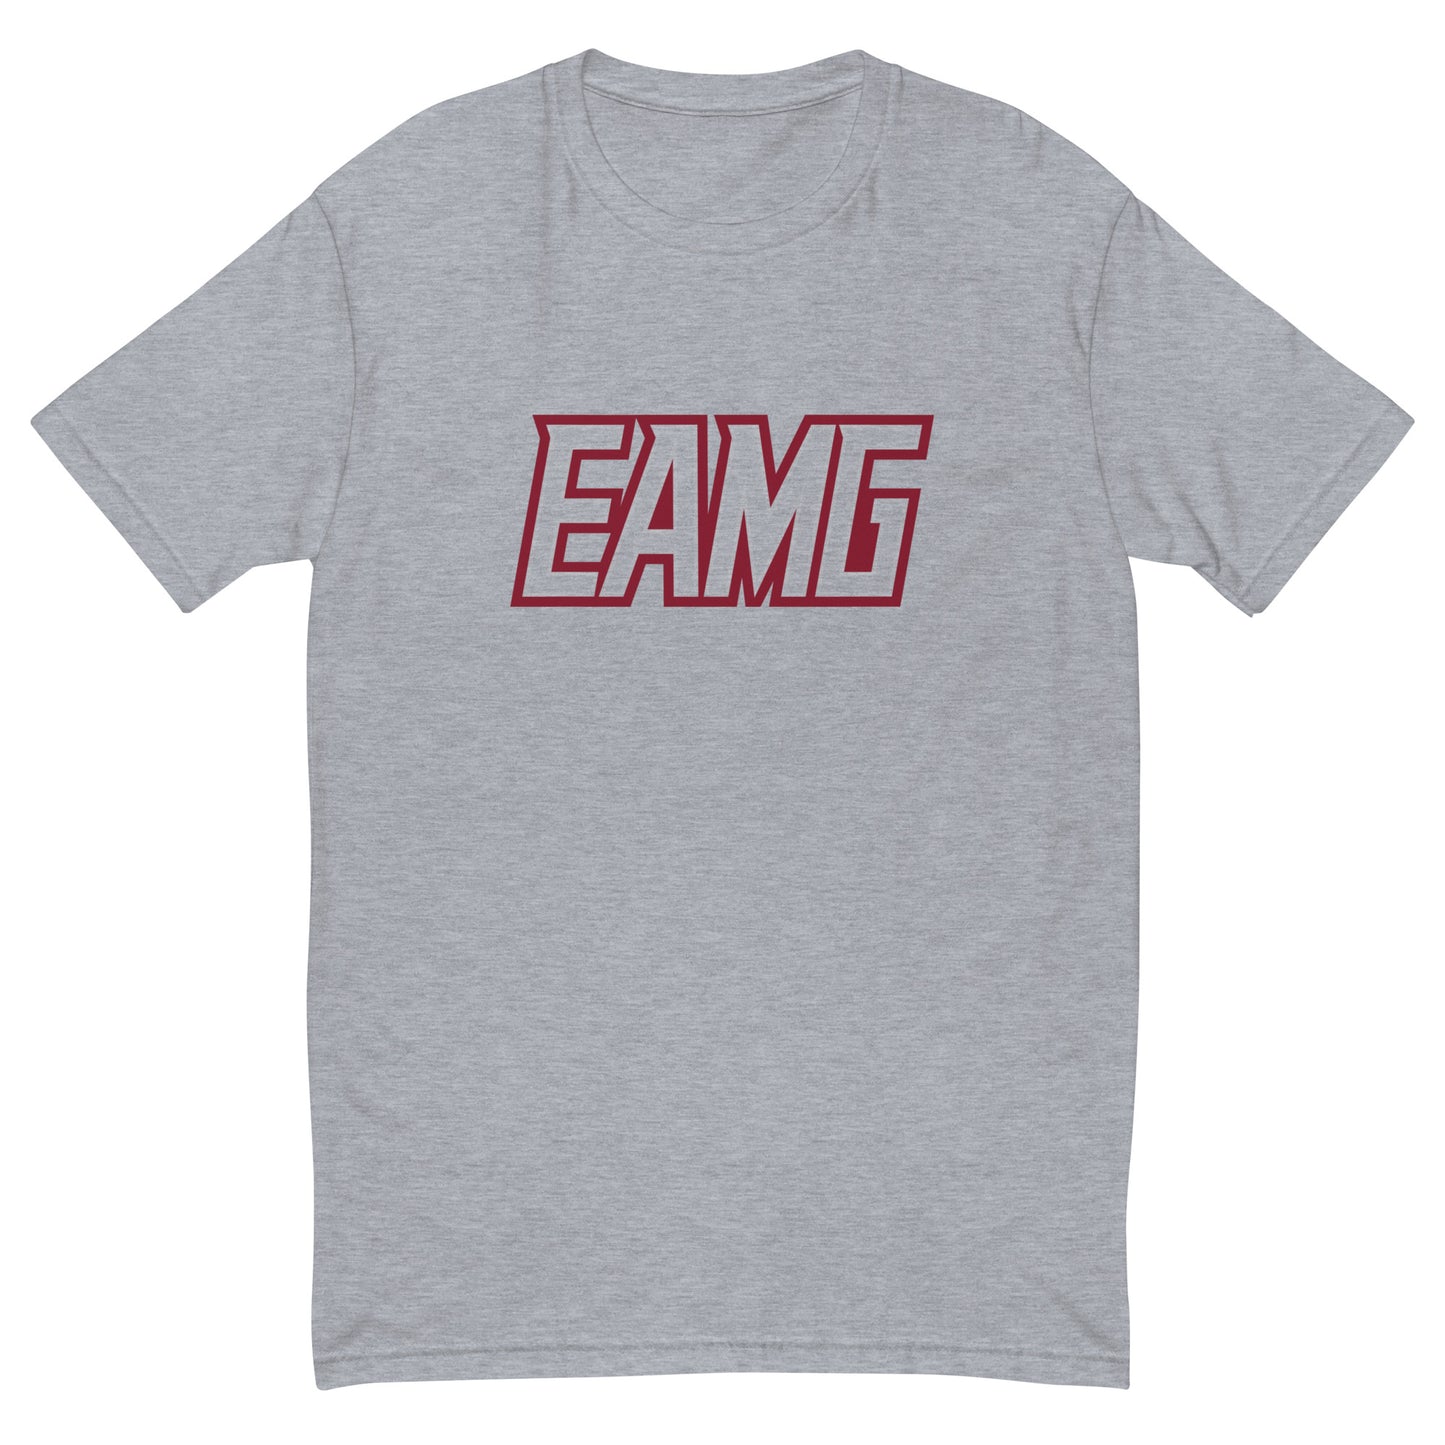 EAMG Short Sleeve T-shirt